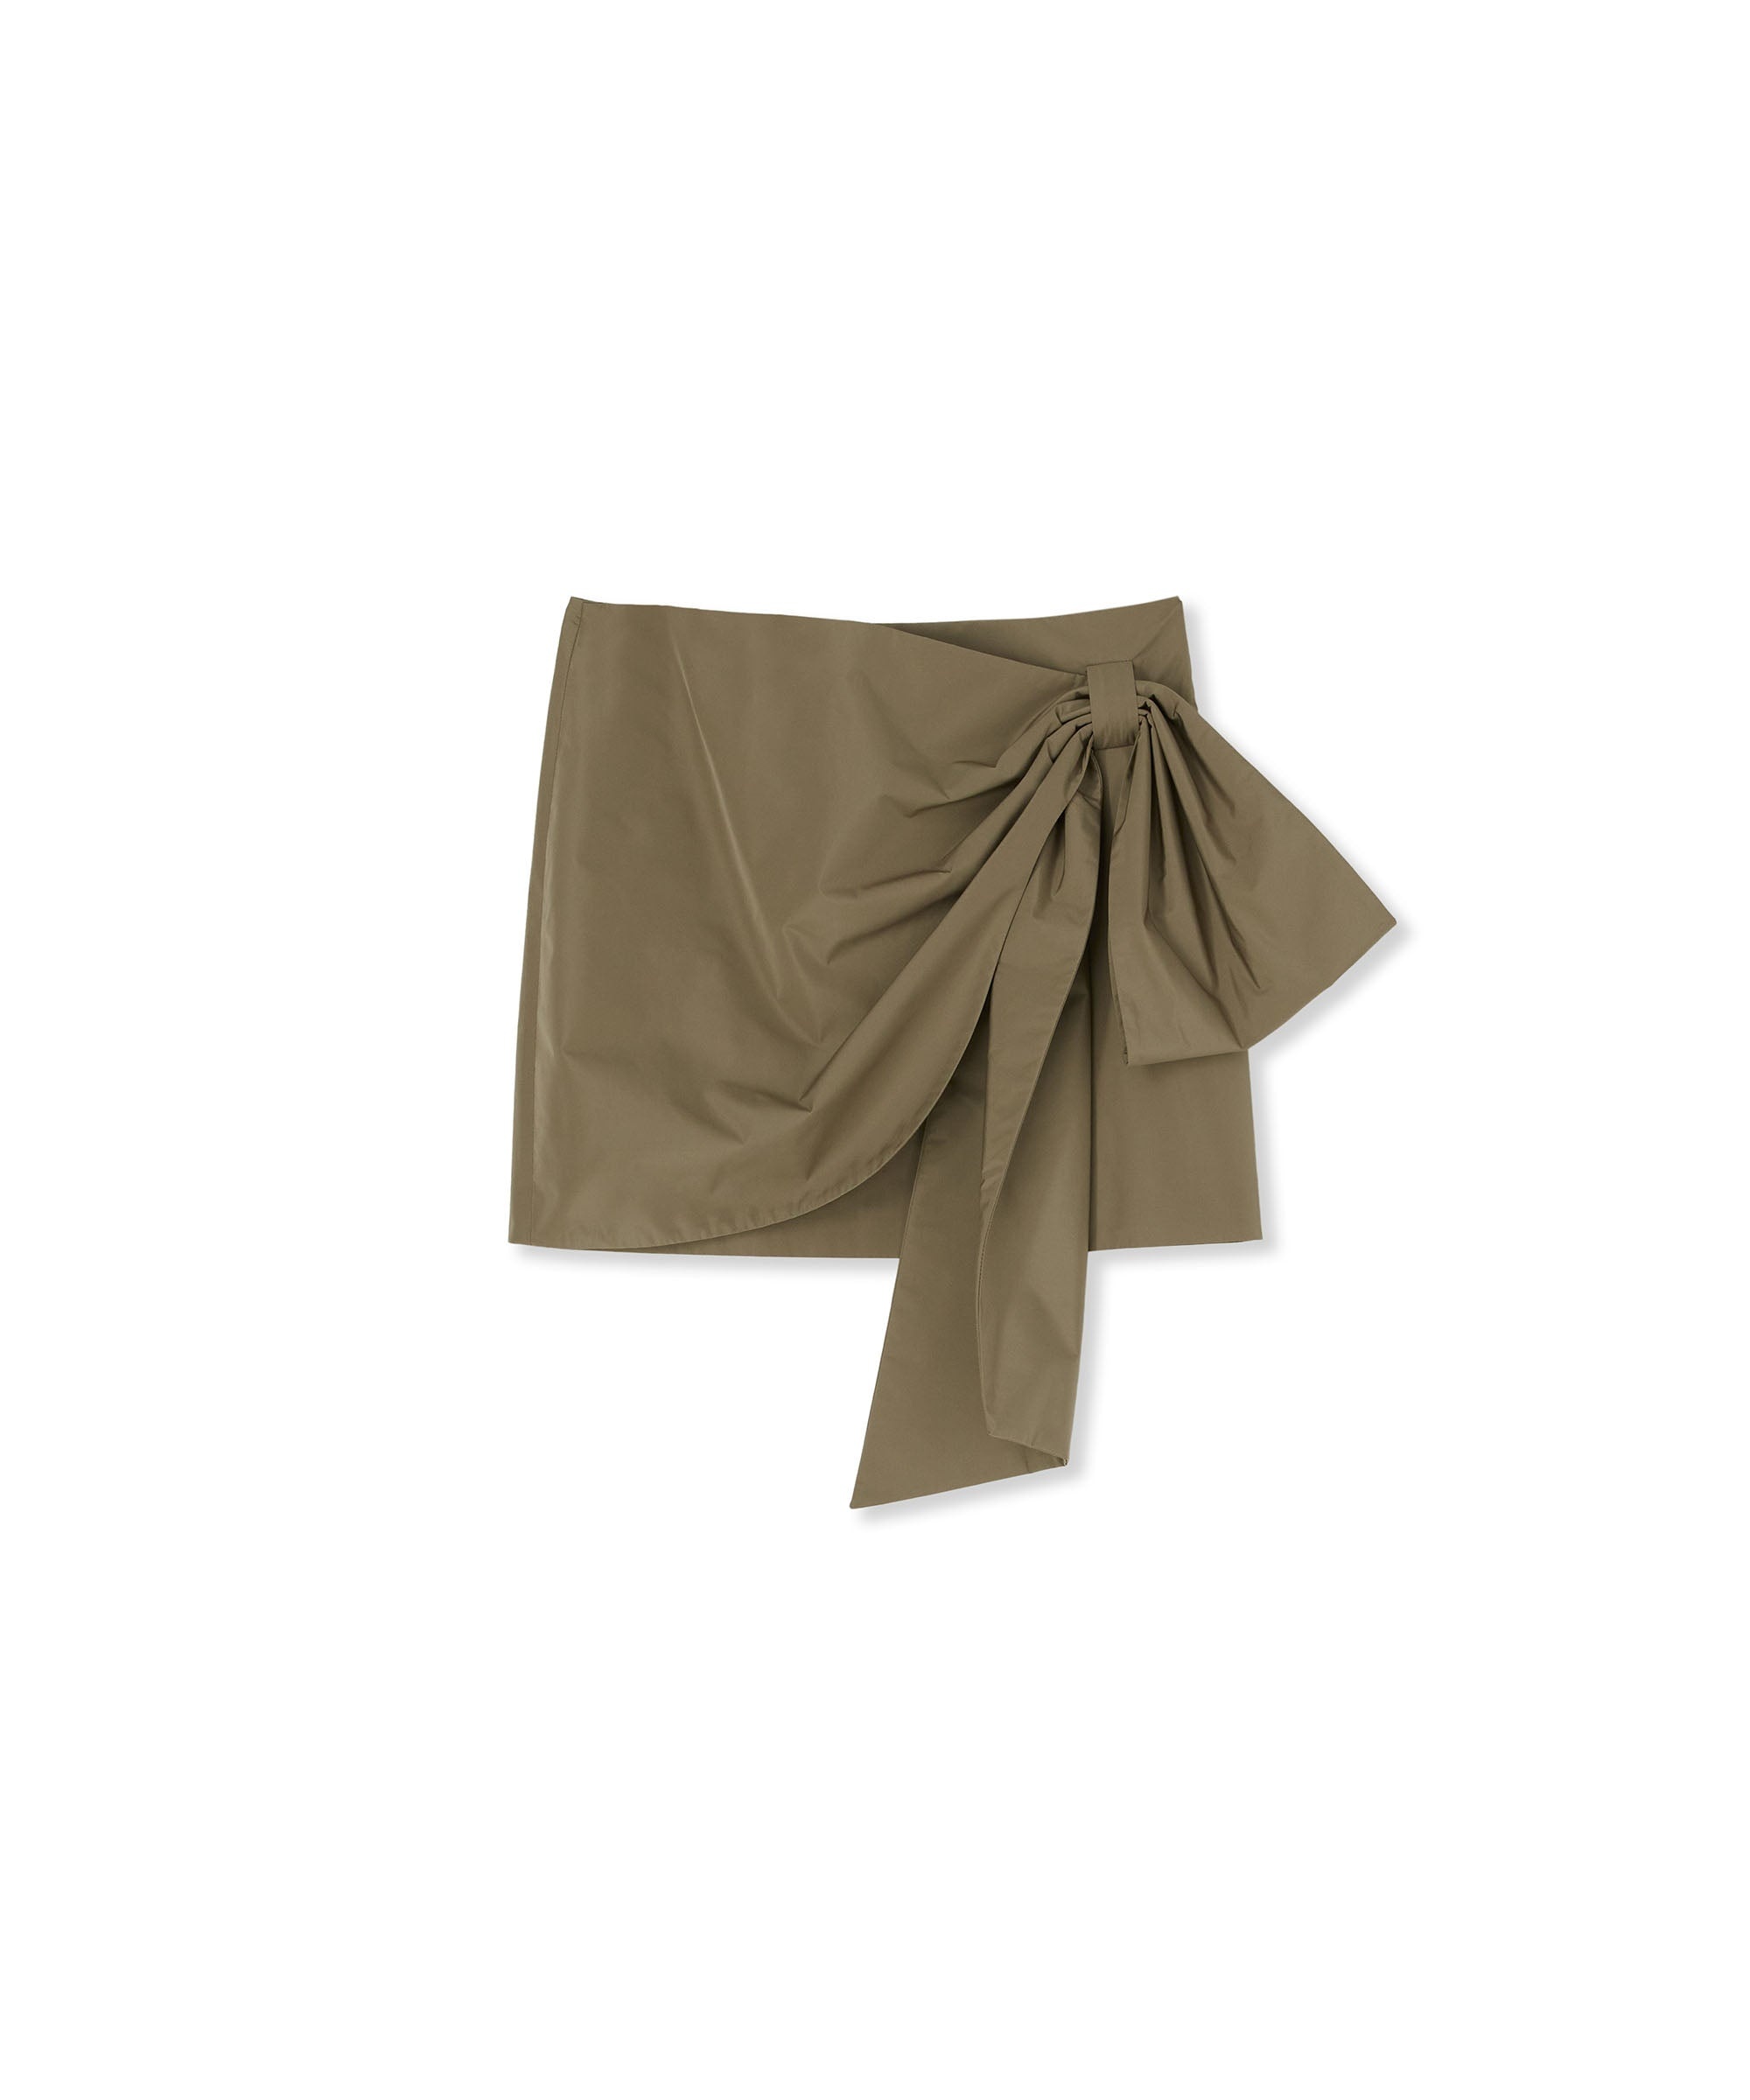 Poplin draped mini skirt with bow - 1